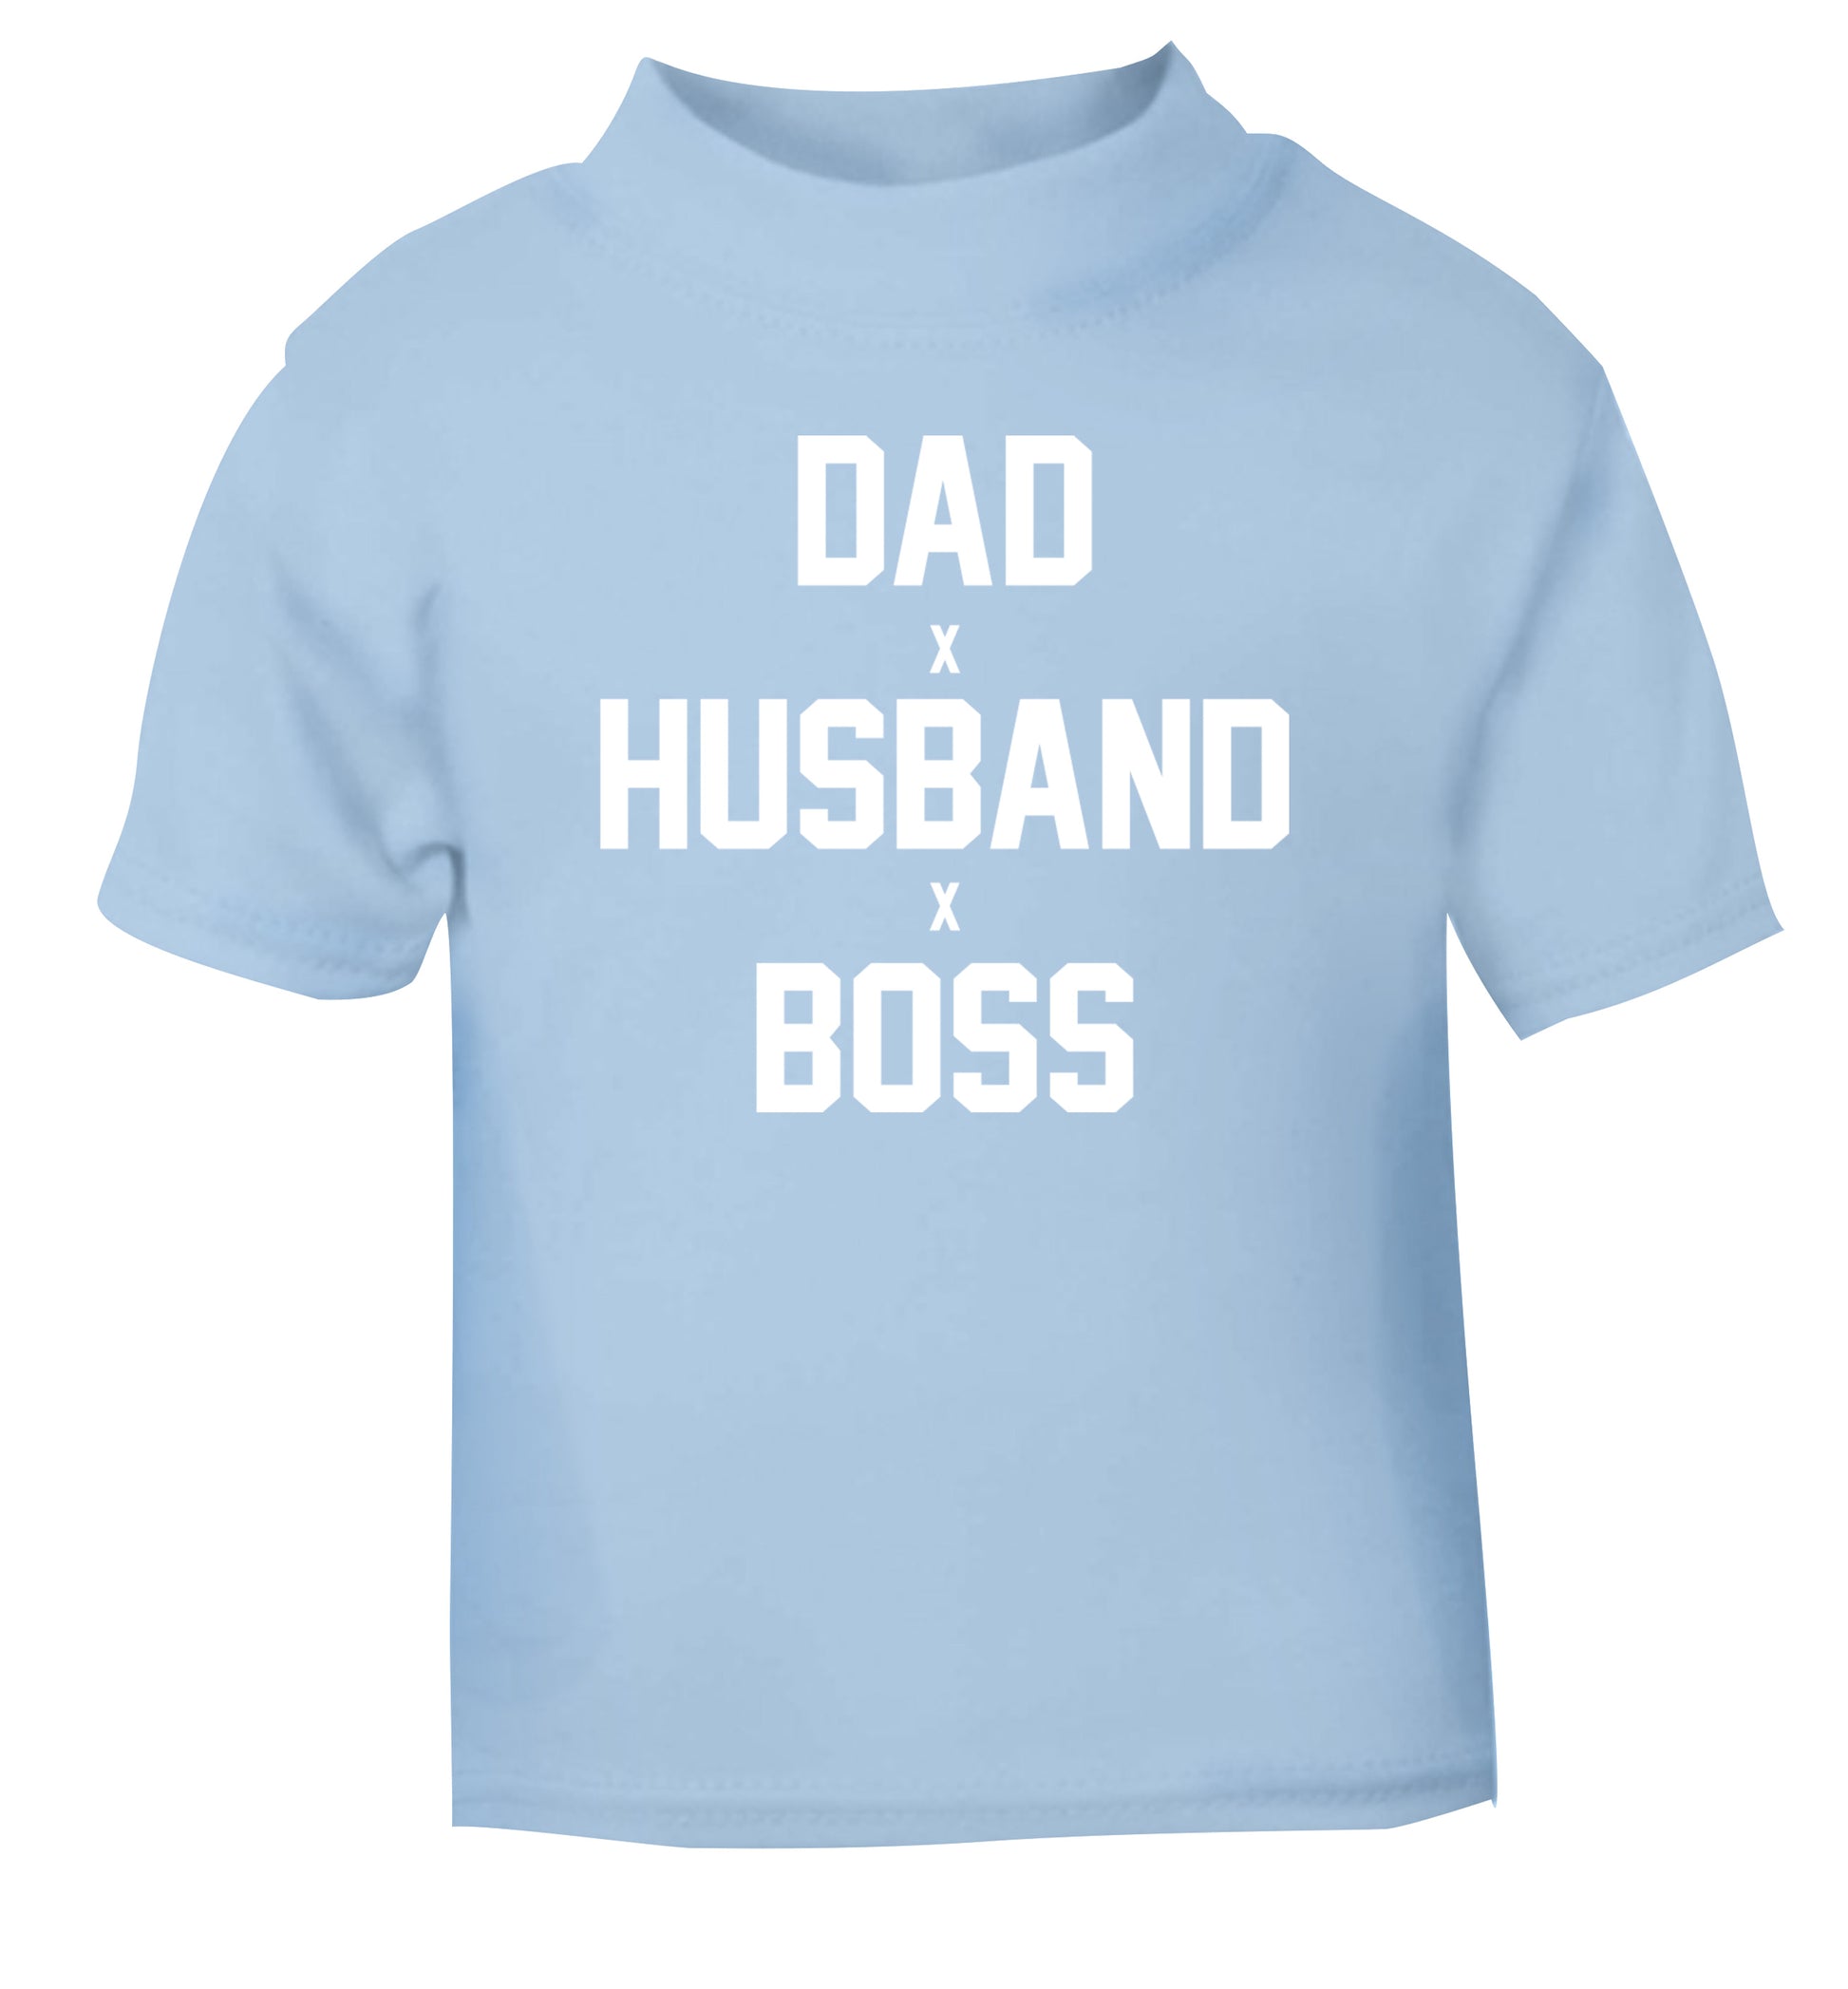 Dad husband boss light blue Baby Toddler Tshirt 2 Years